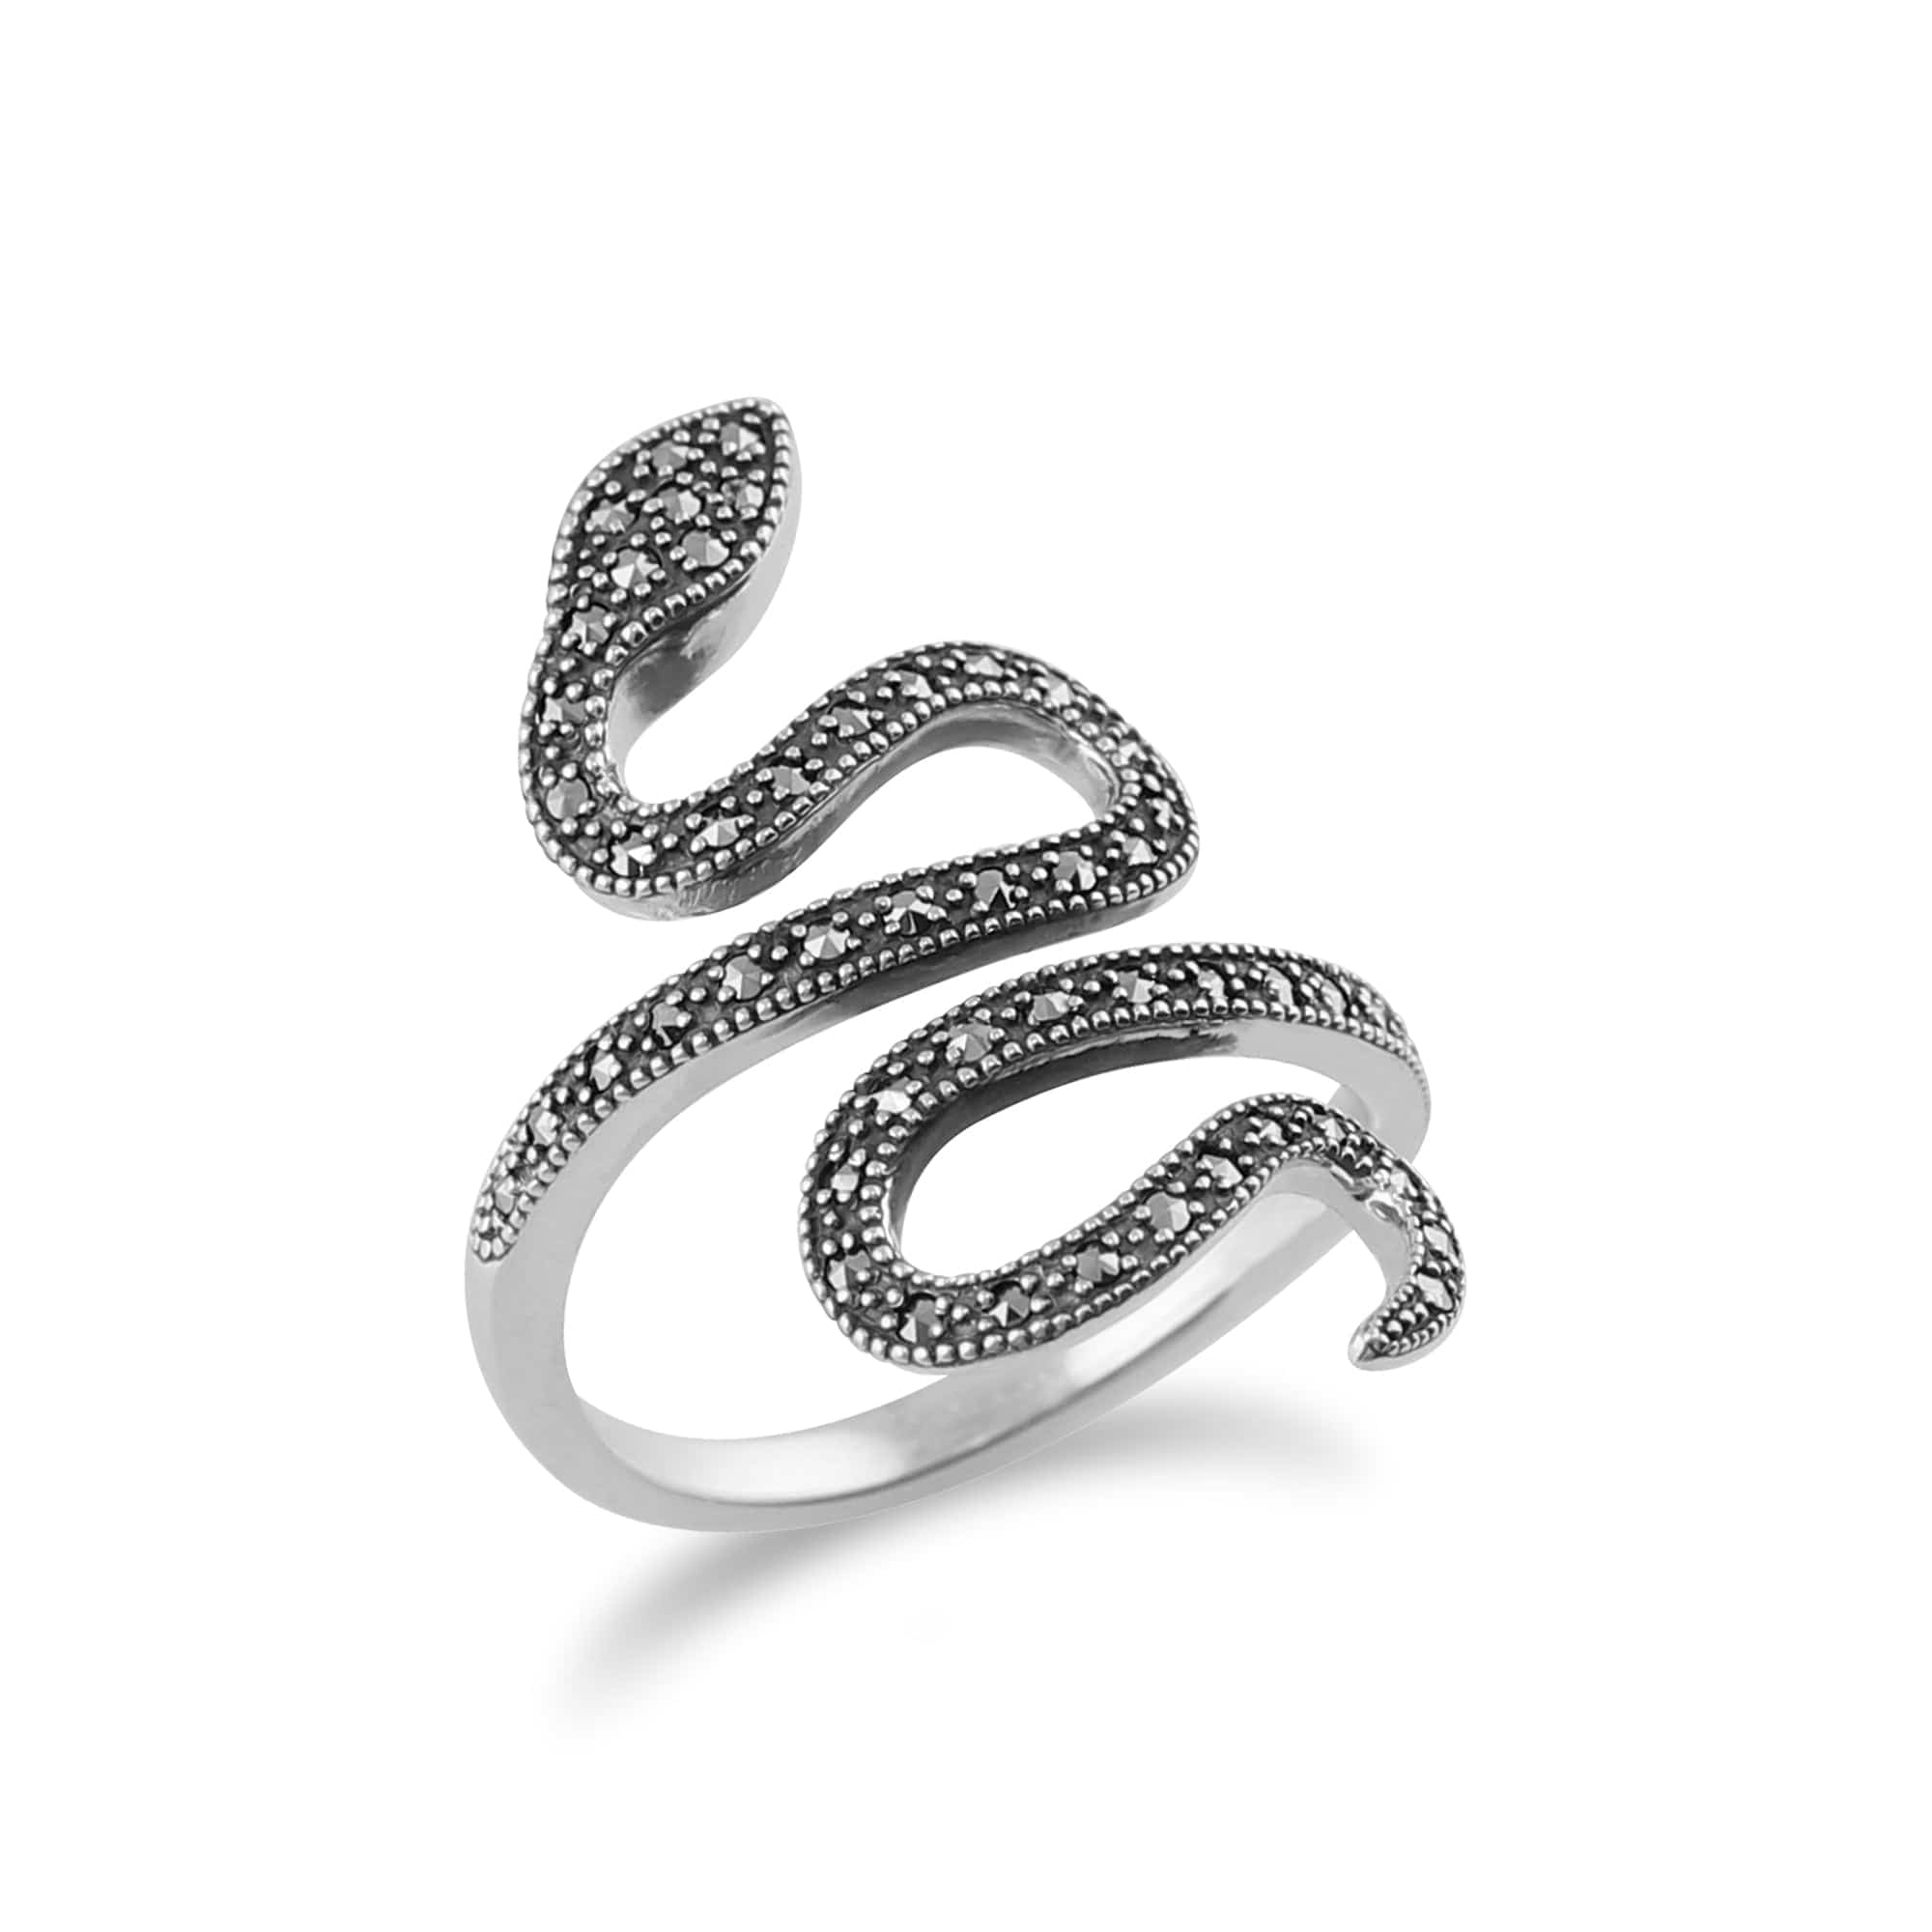 214R579201925 Art Nouveau Style Round Marcasite Silver Snake Boho Ring 2